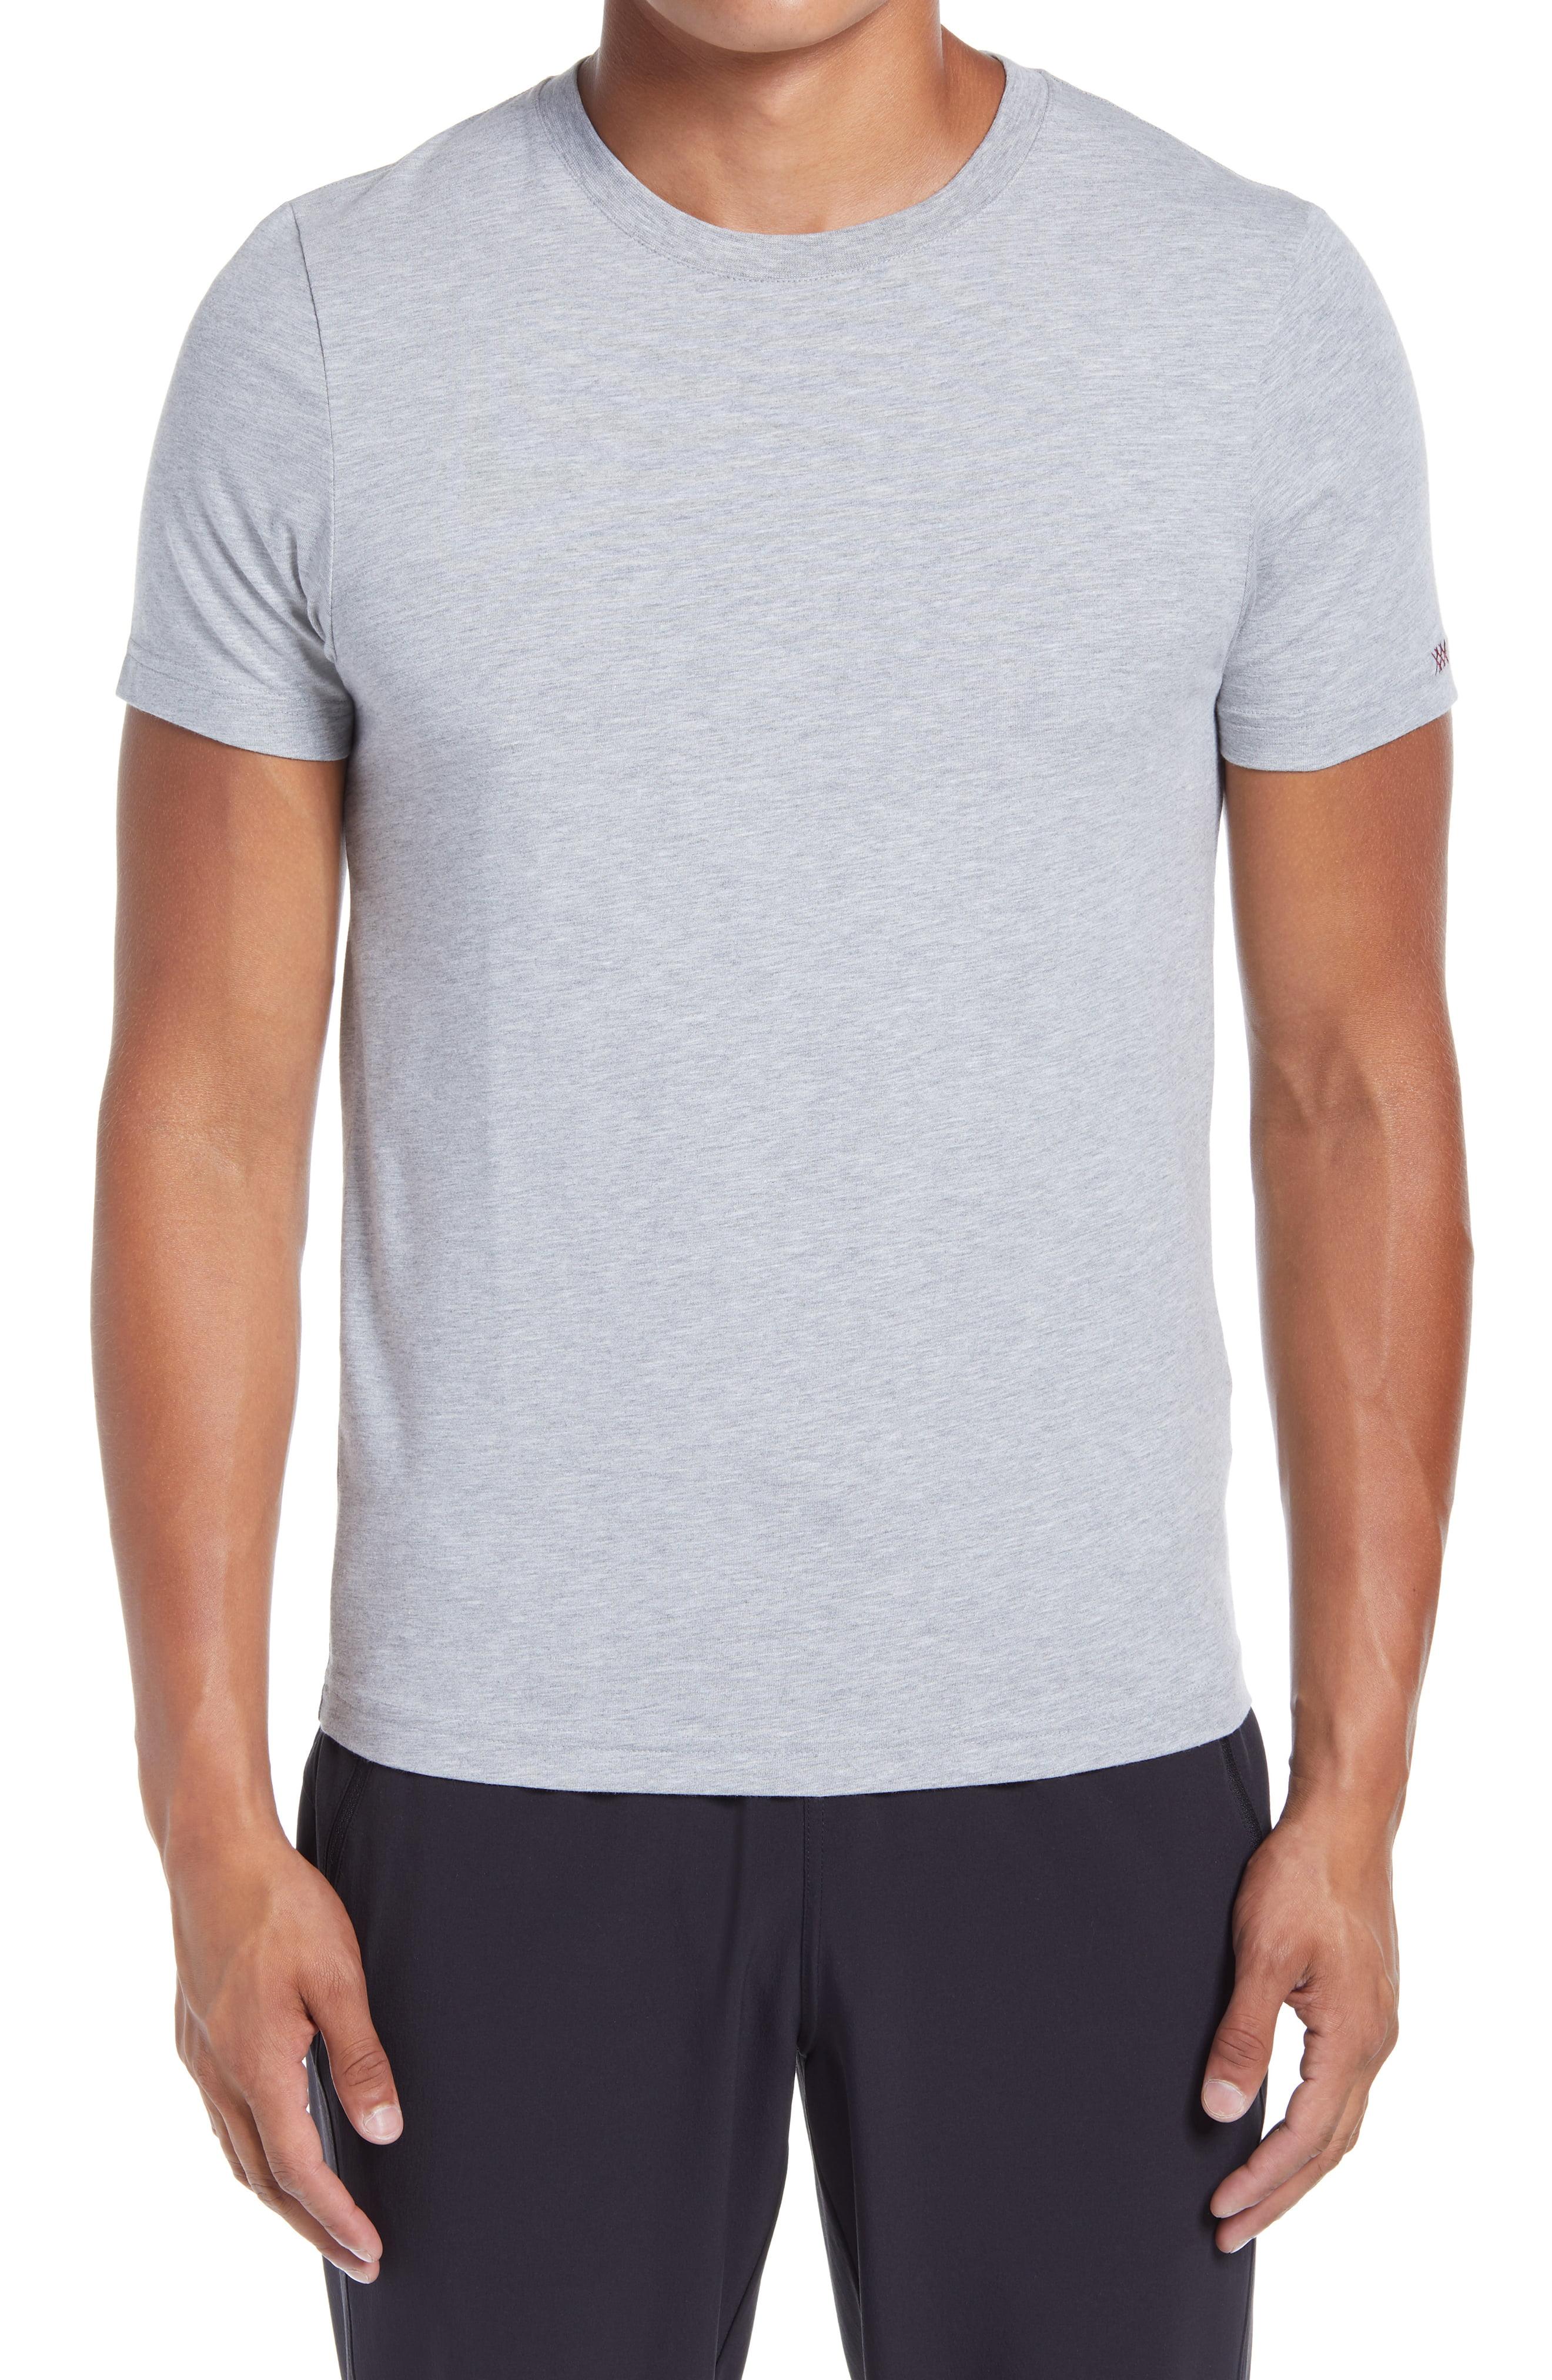 Rhone Cotton Element Crew Neck Heathered T-shirt in Heather Gray (Gray ...